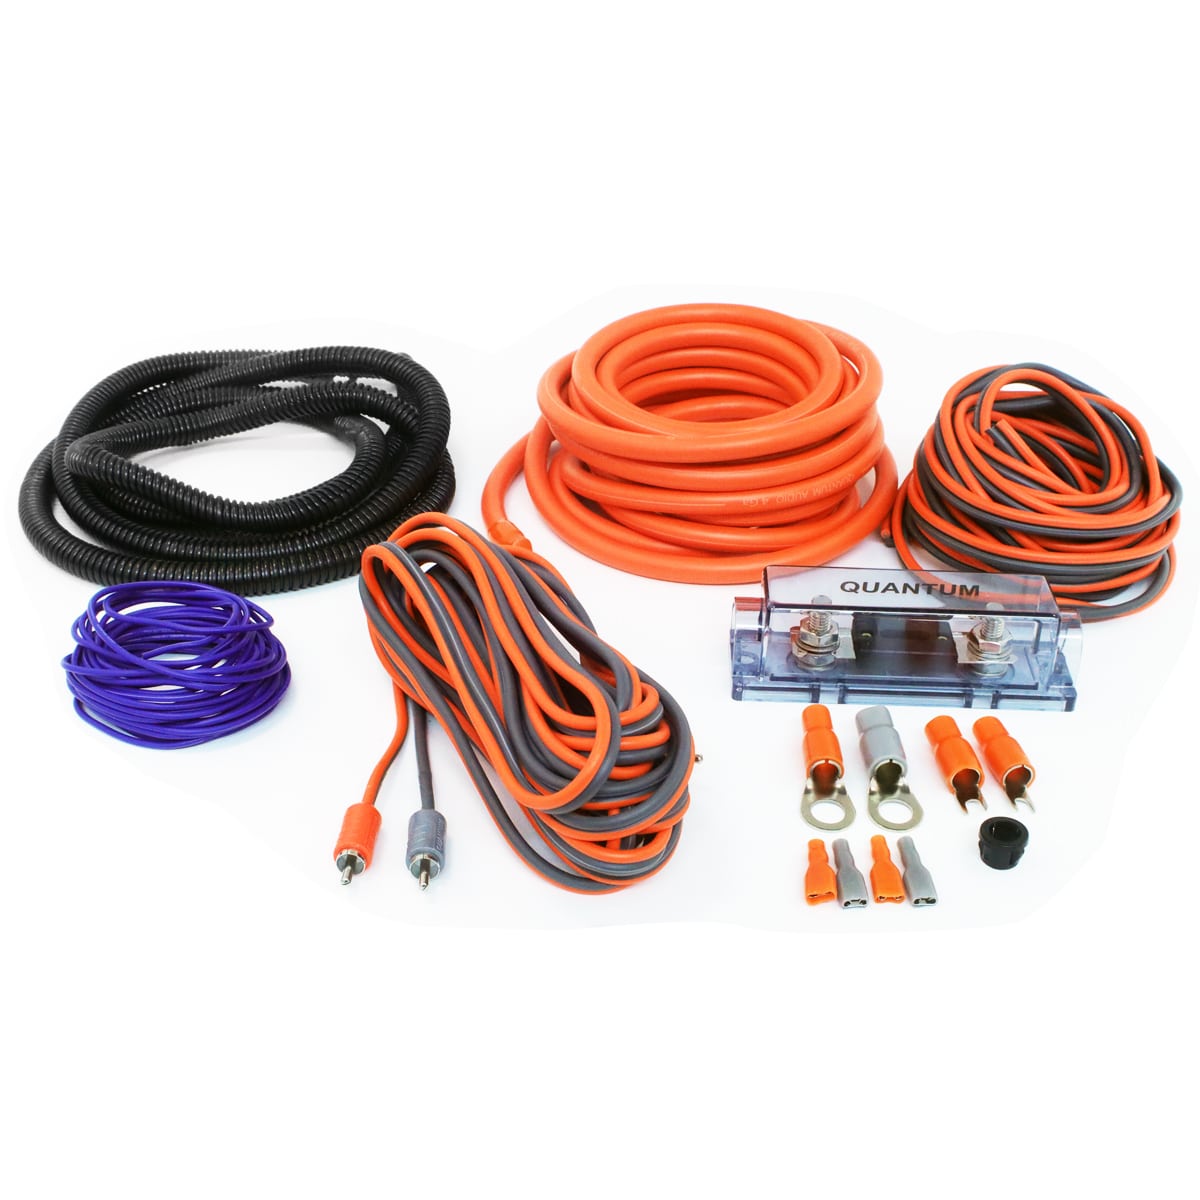 Kit Cables Quantum QANL-4K Alta Calidad Americano 60 amp 1200 watts -  Tienda Online, Car Audio